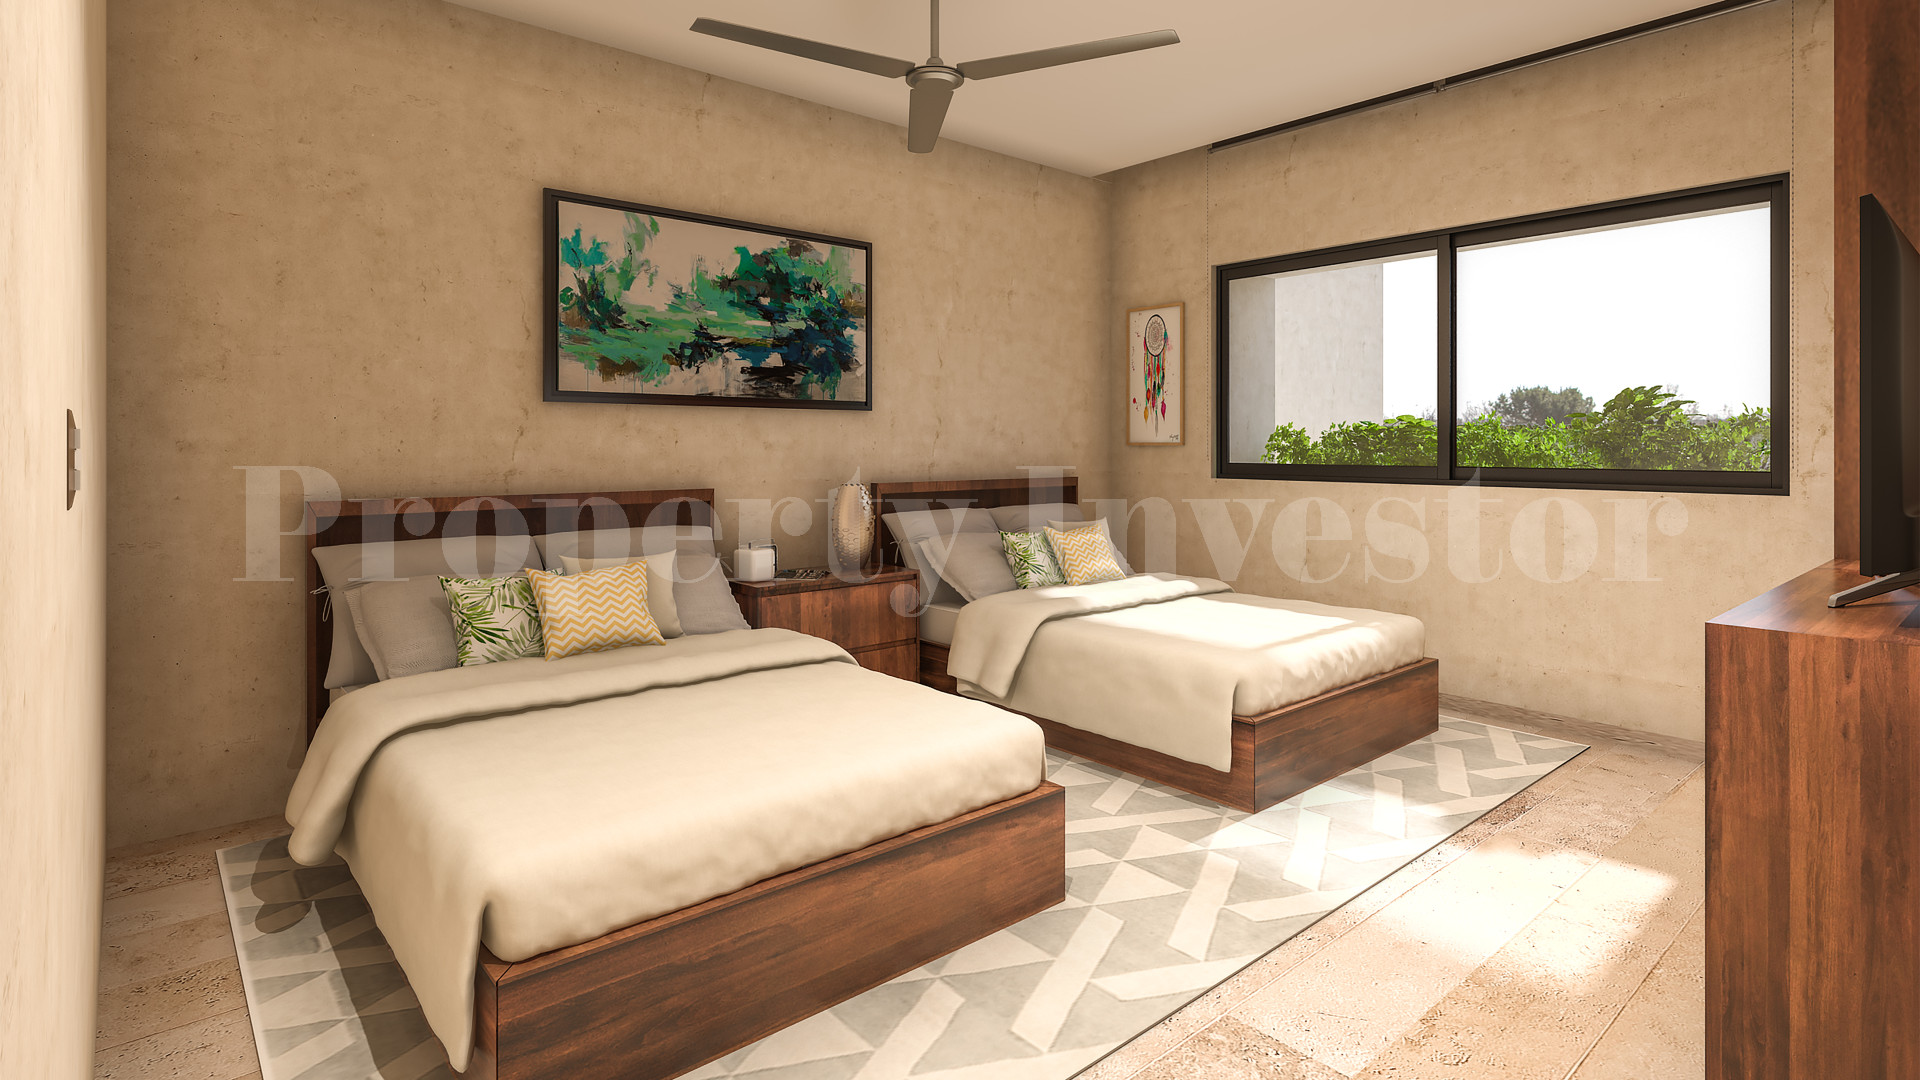 2 Bedroom Boutique Apartment with Garden in Tulum (B-001)